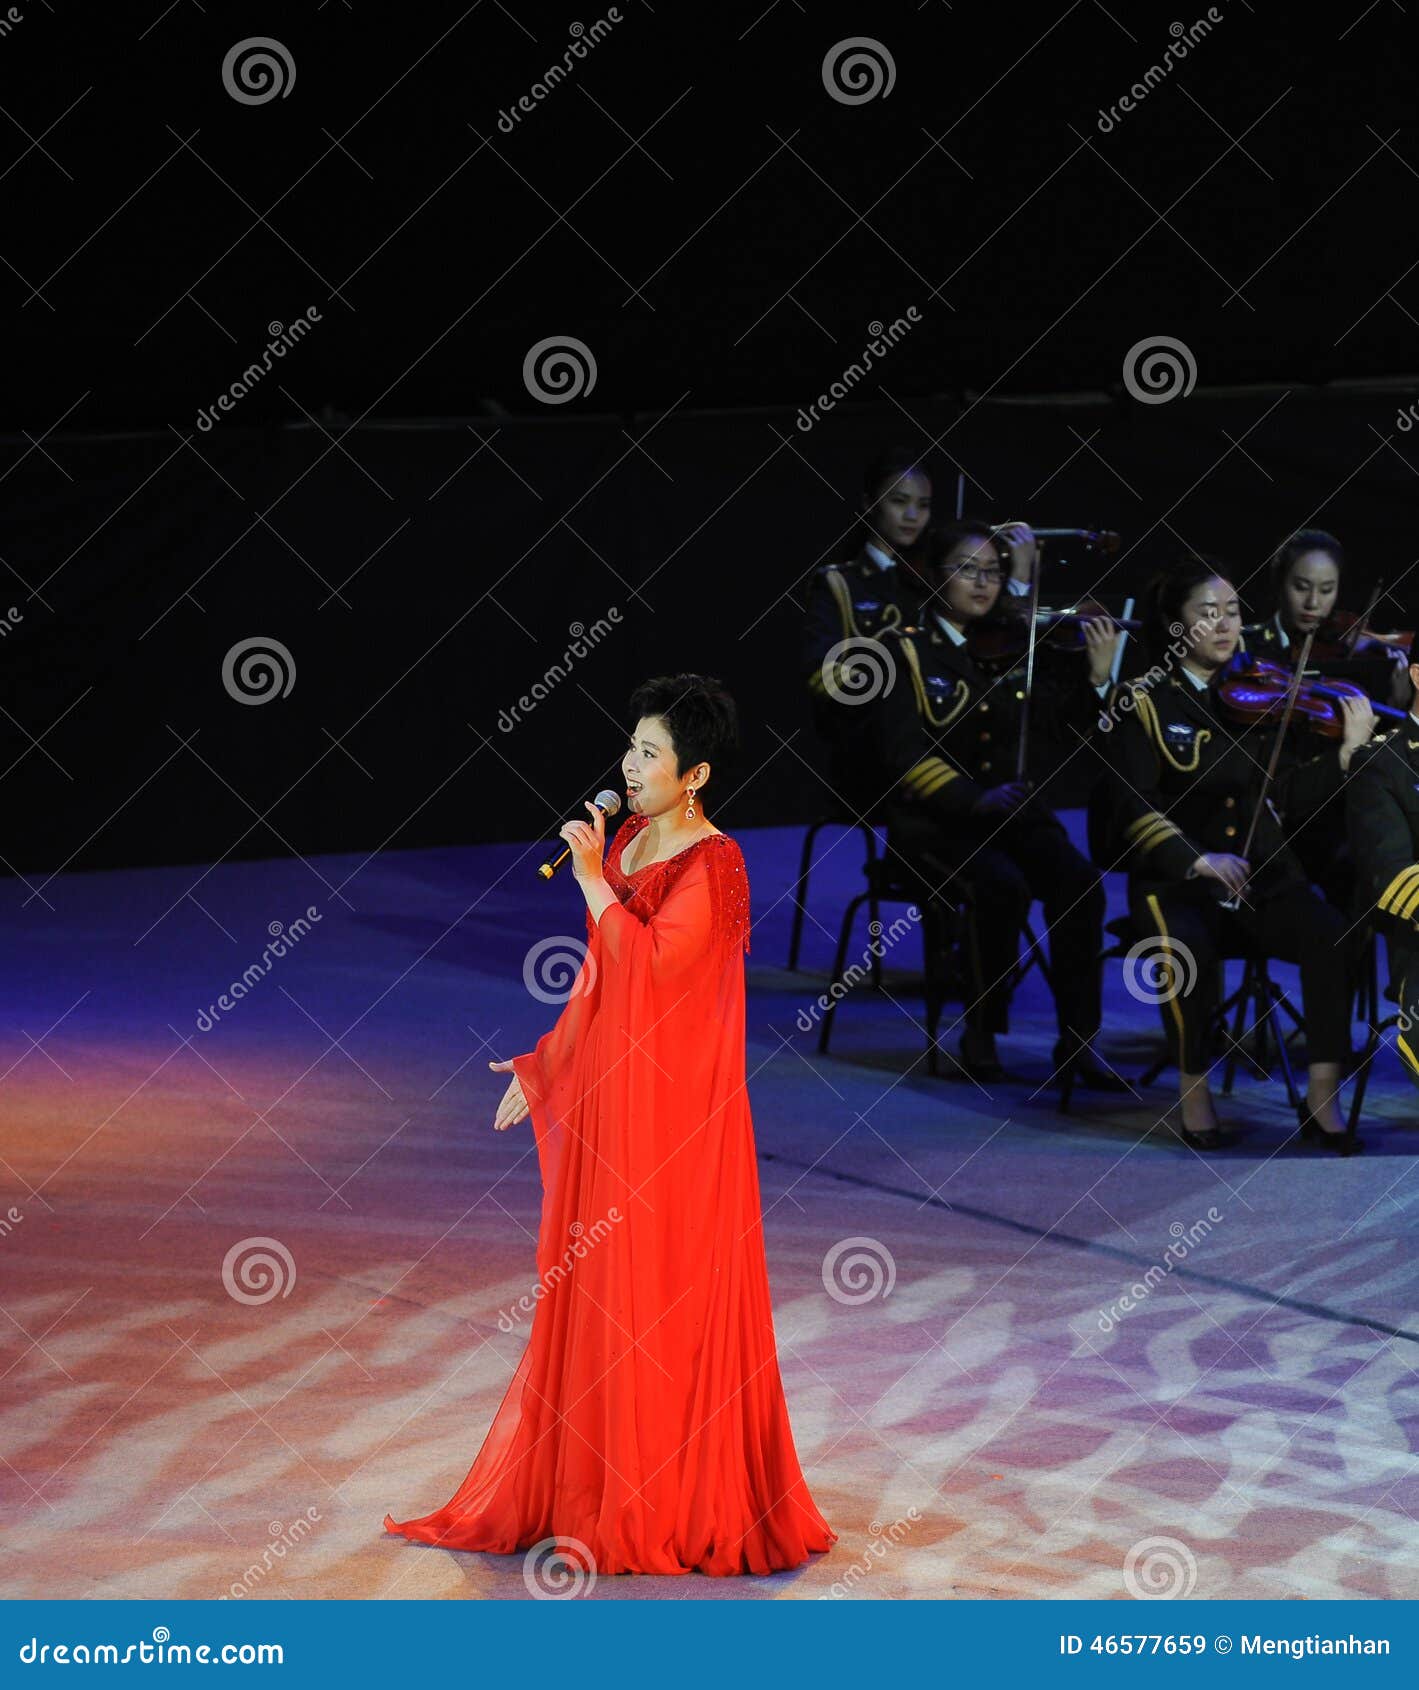 Chinese Famous Female Singer WenhuatheFamous and Classicconcert